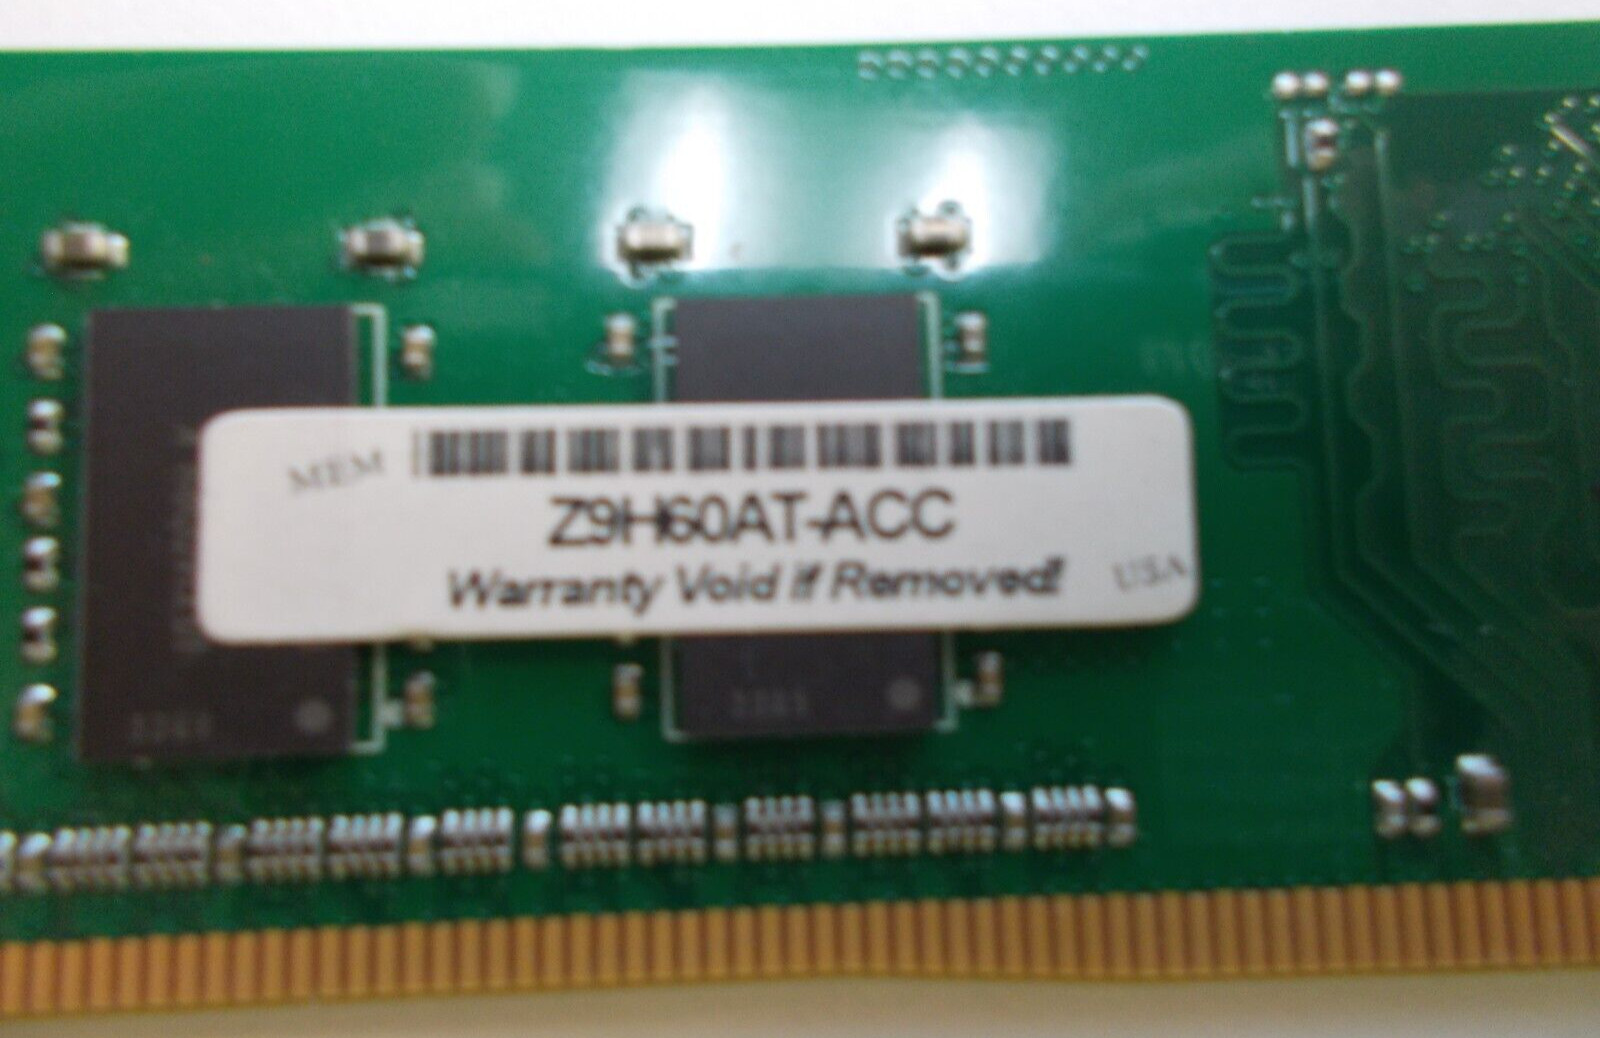 Accortec 8GB DDR4 2400MHz 1.2V UDIMM Memory Module Z9H60AT-ACC